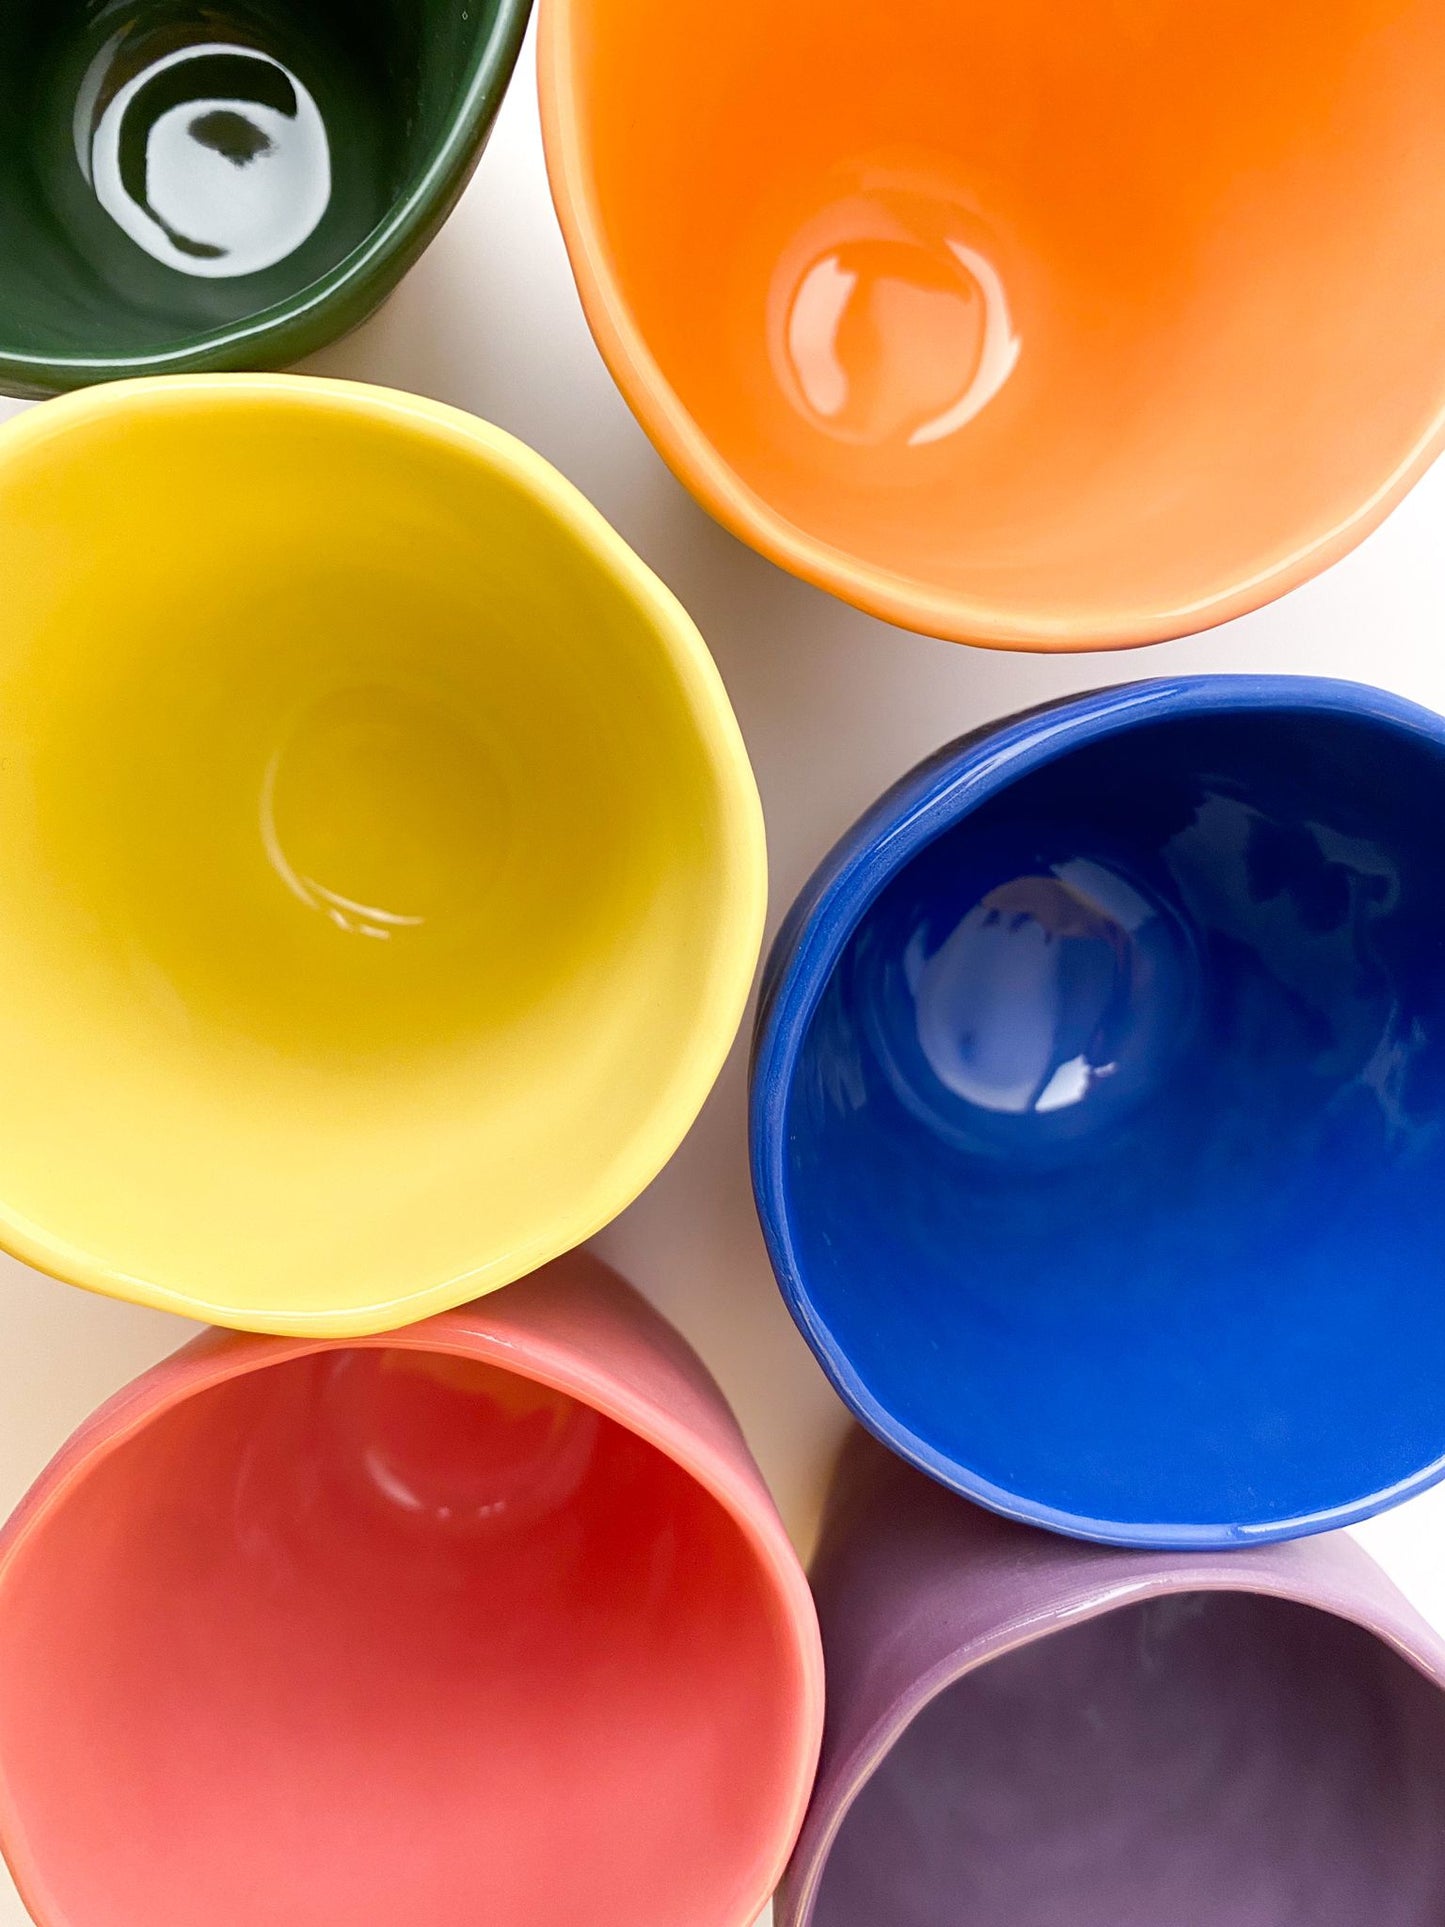 Colourful porcelain teacup